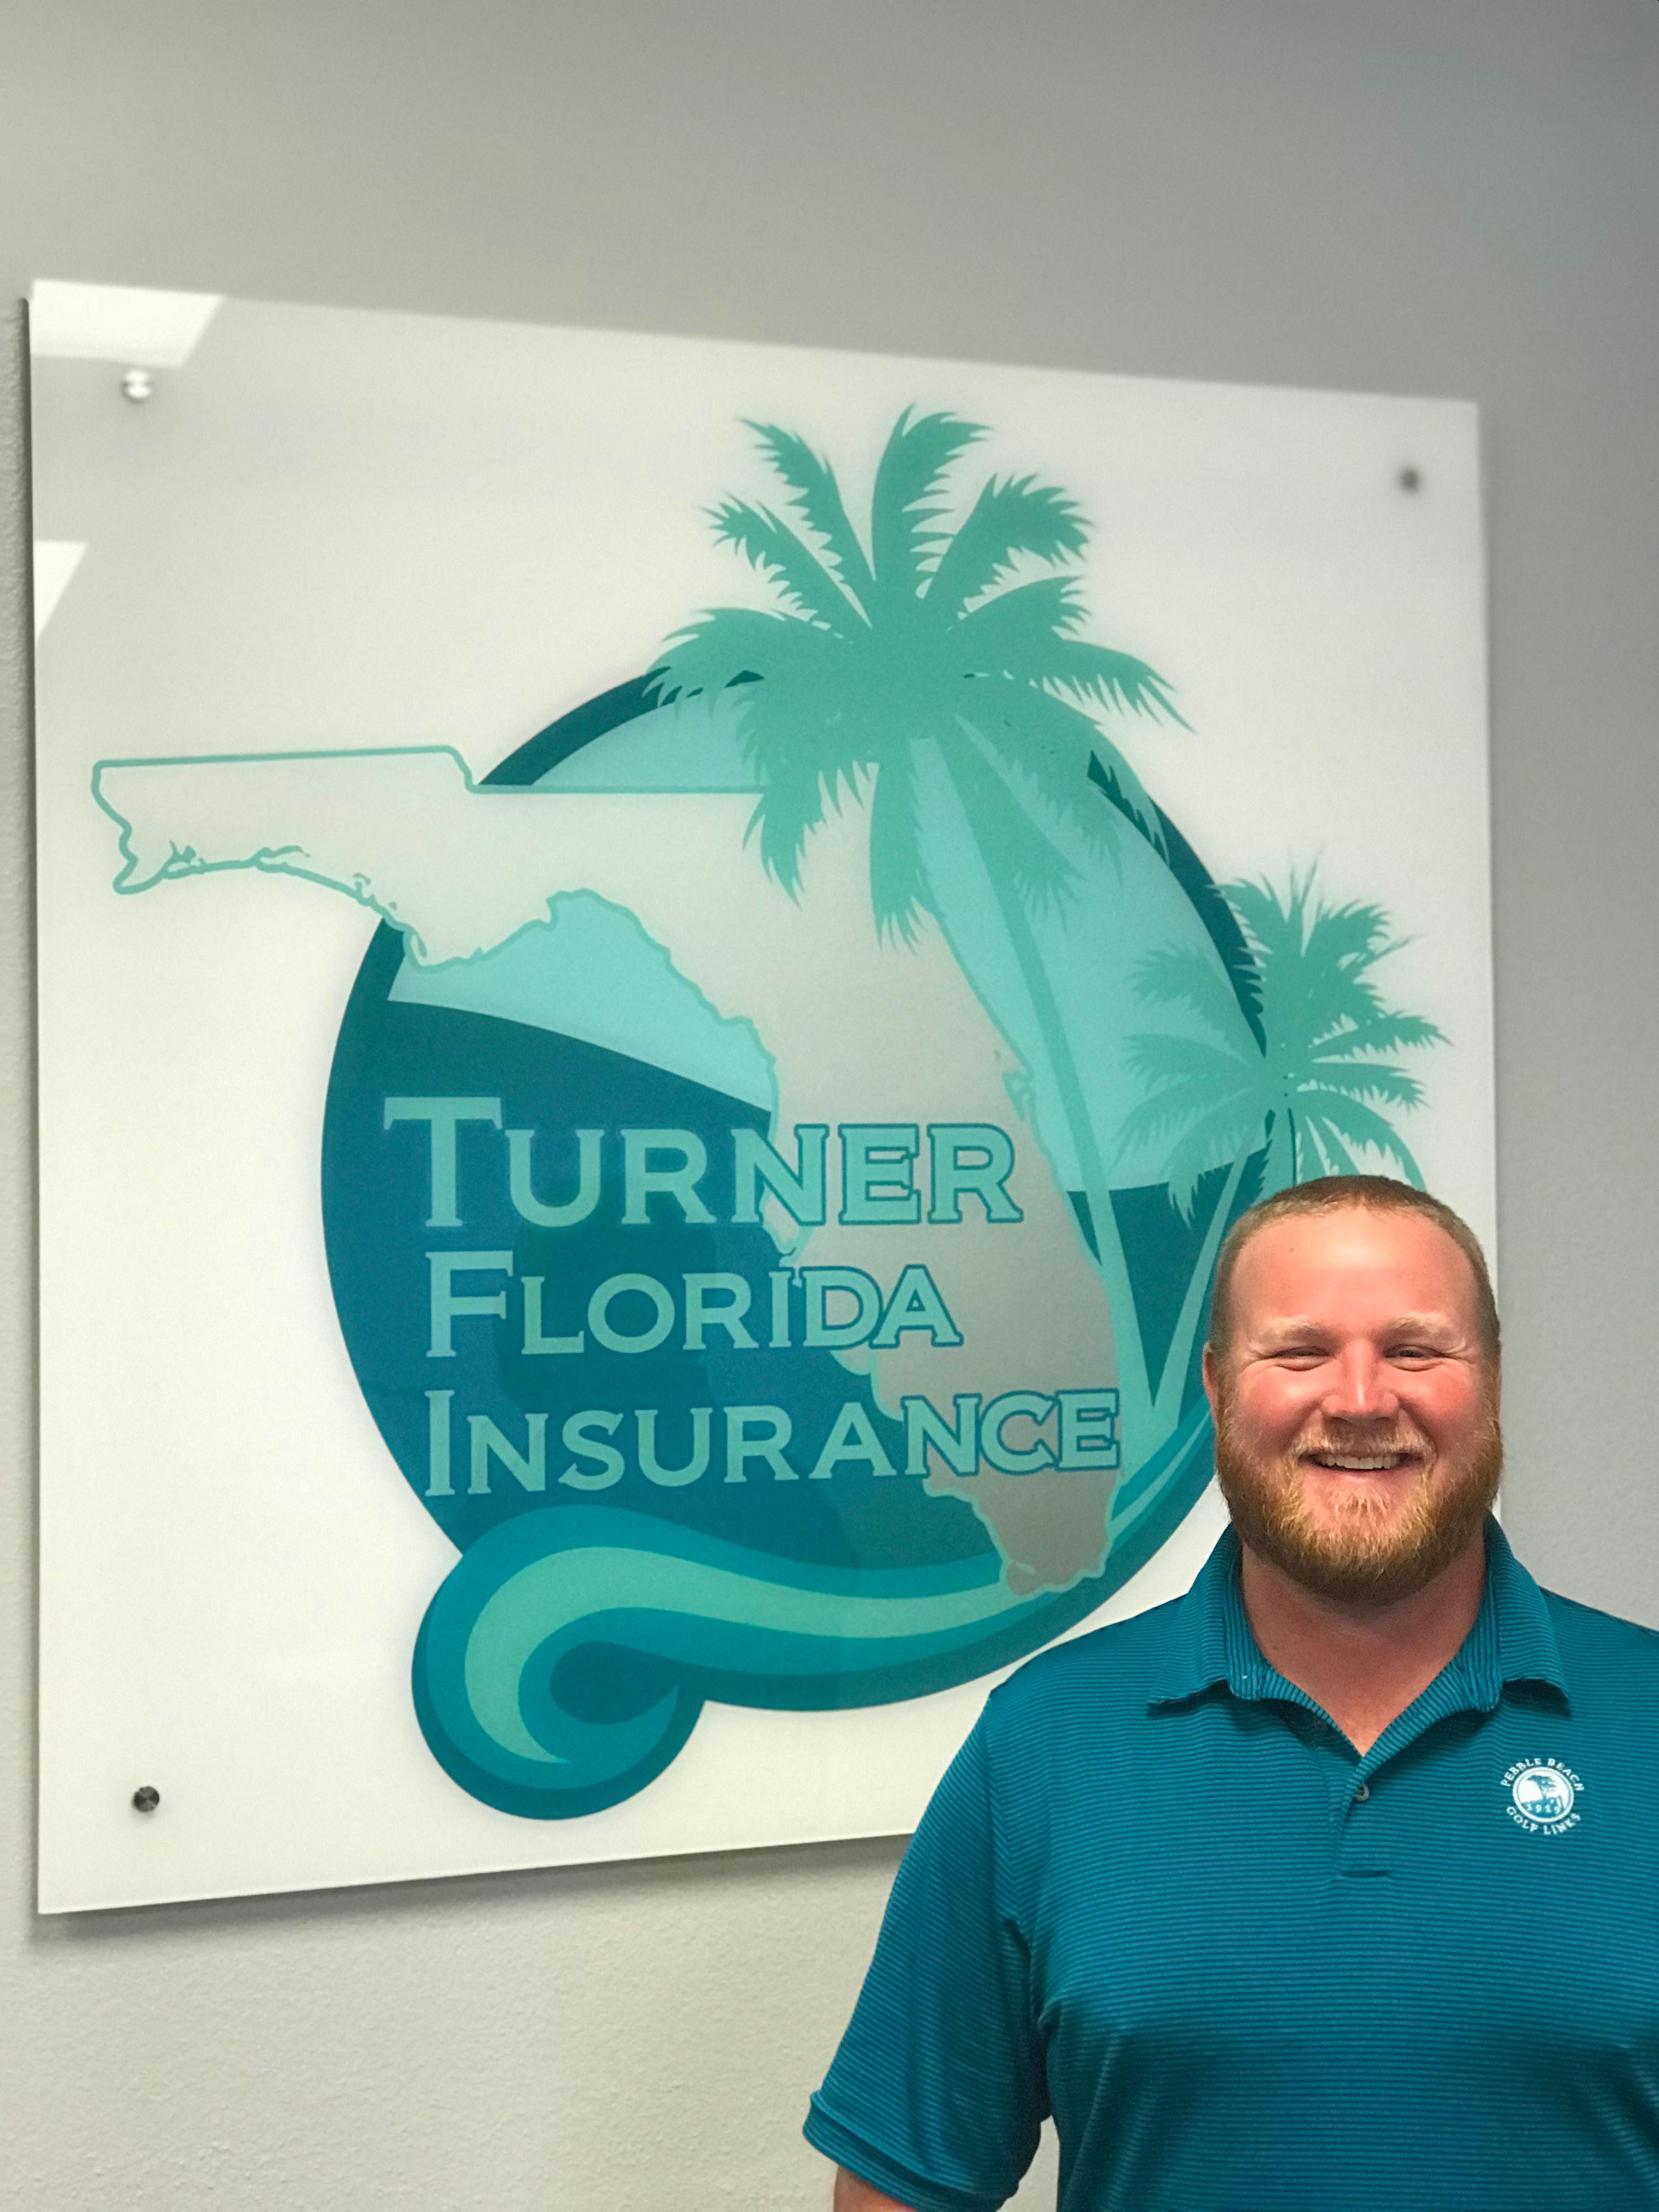 Turner Florida Insurance Photo